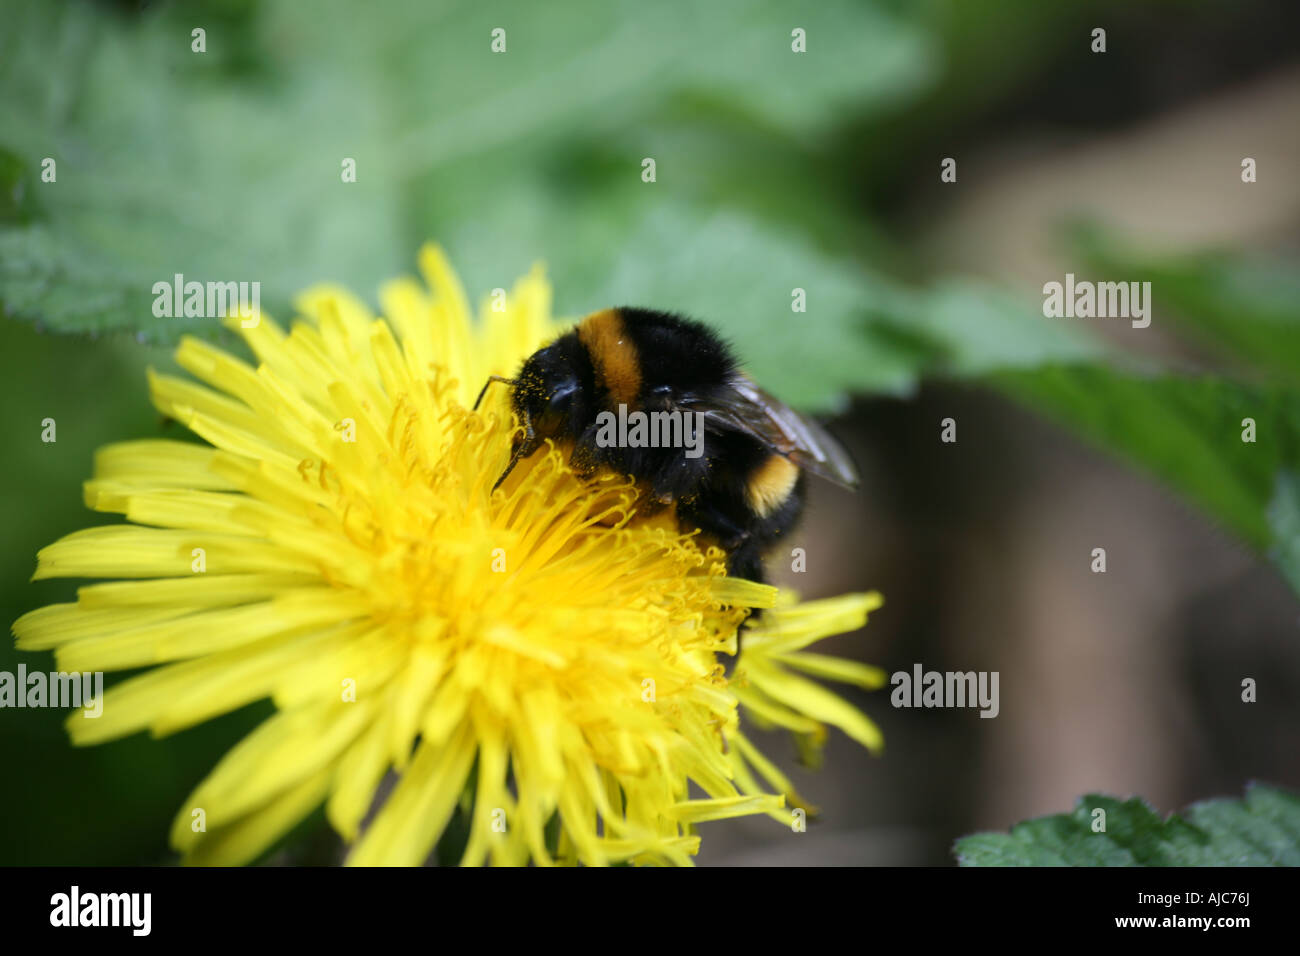 Bumble bee dating app in Dhaka